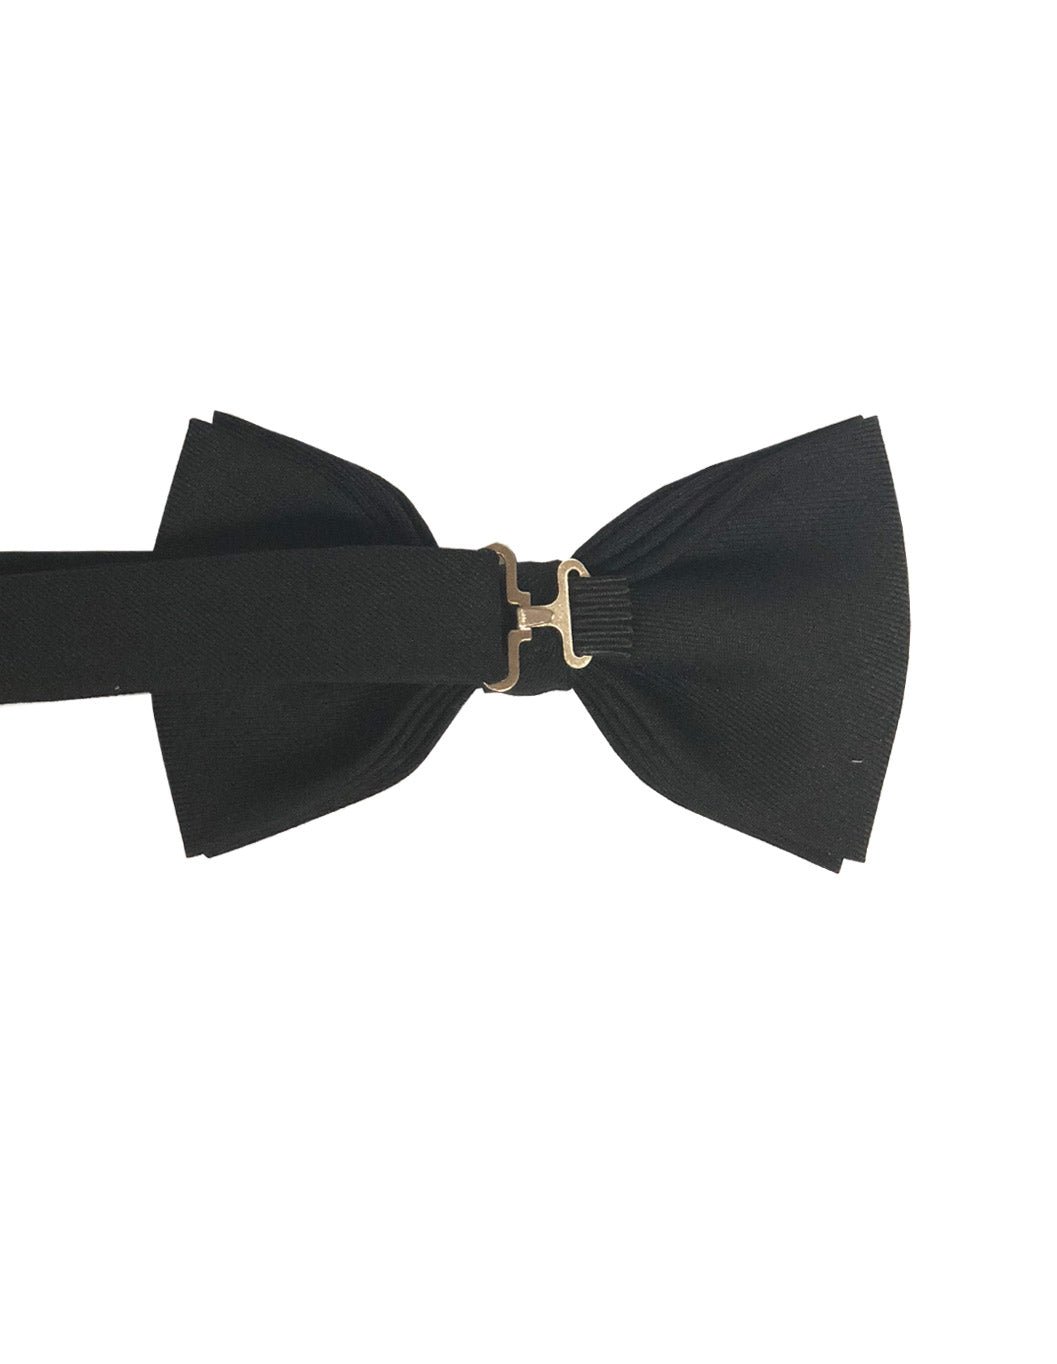 Black Cotton Bow Tie